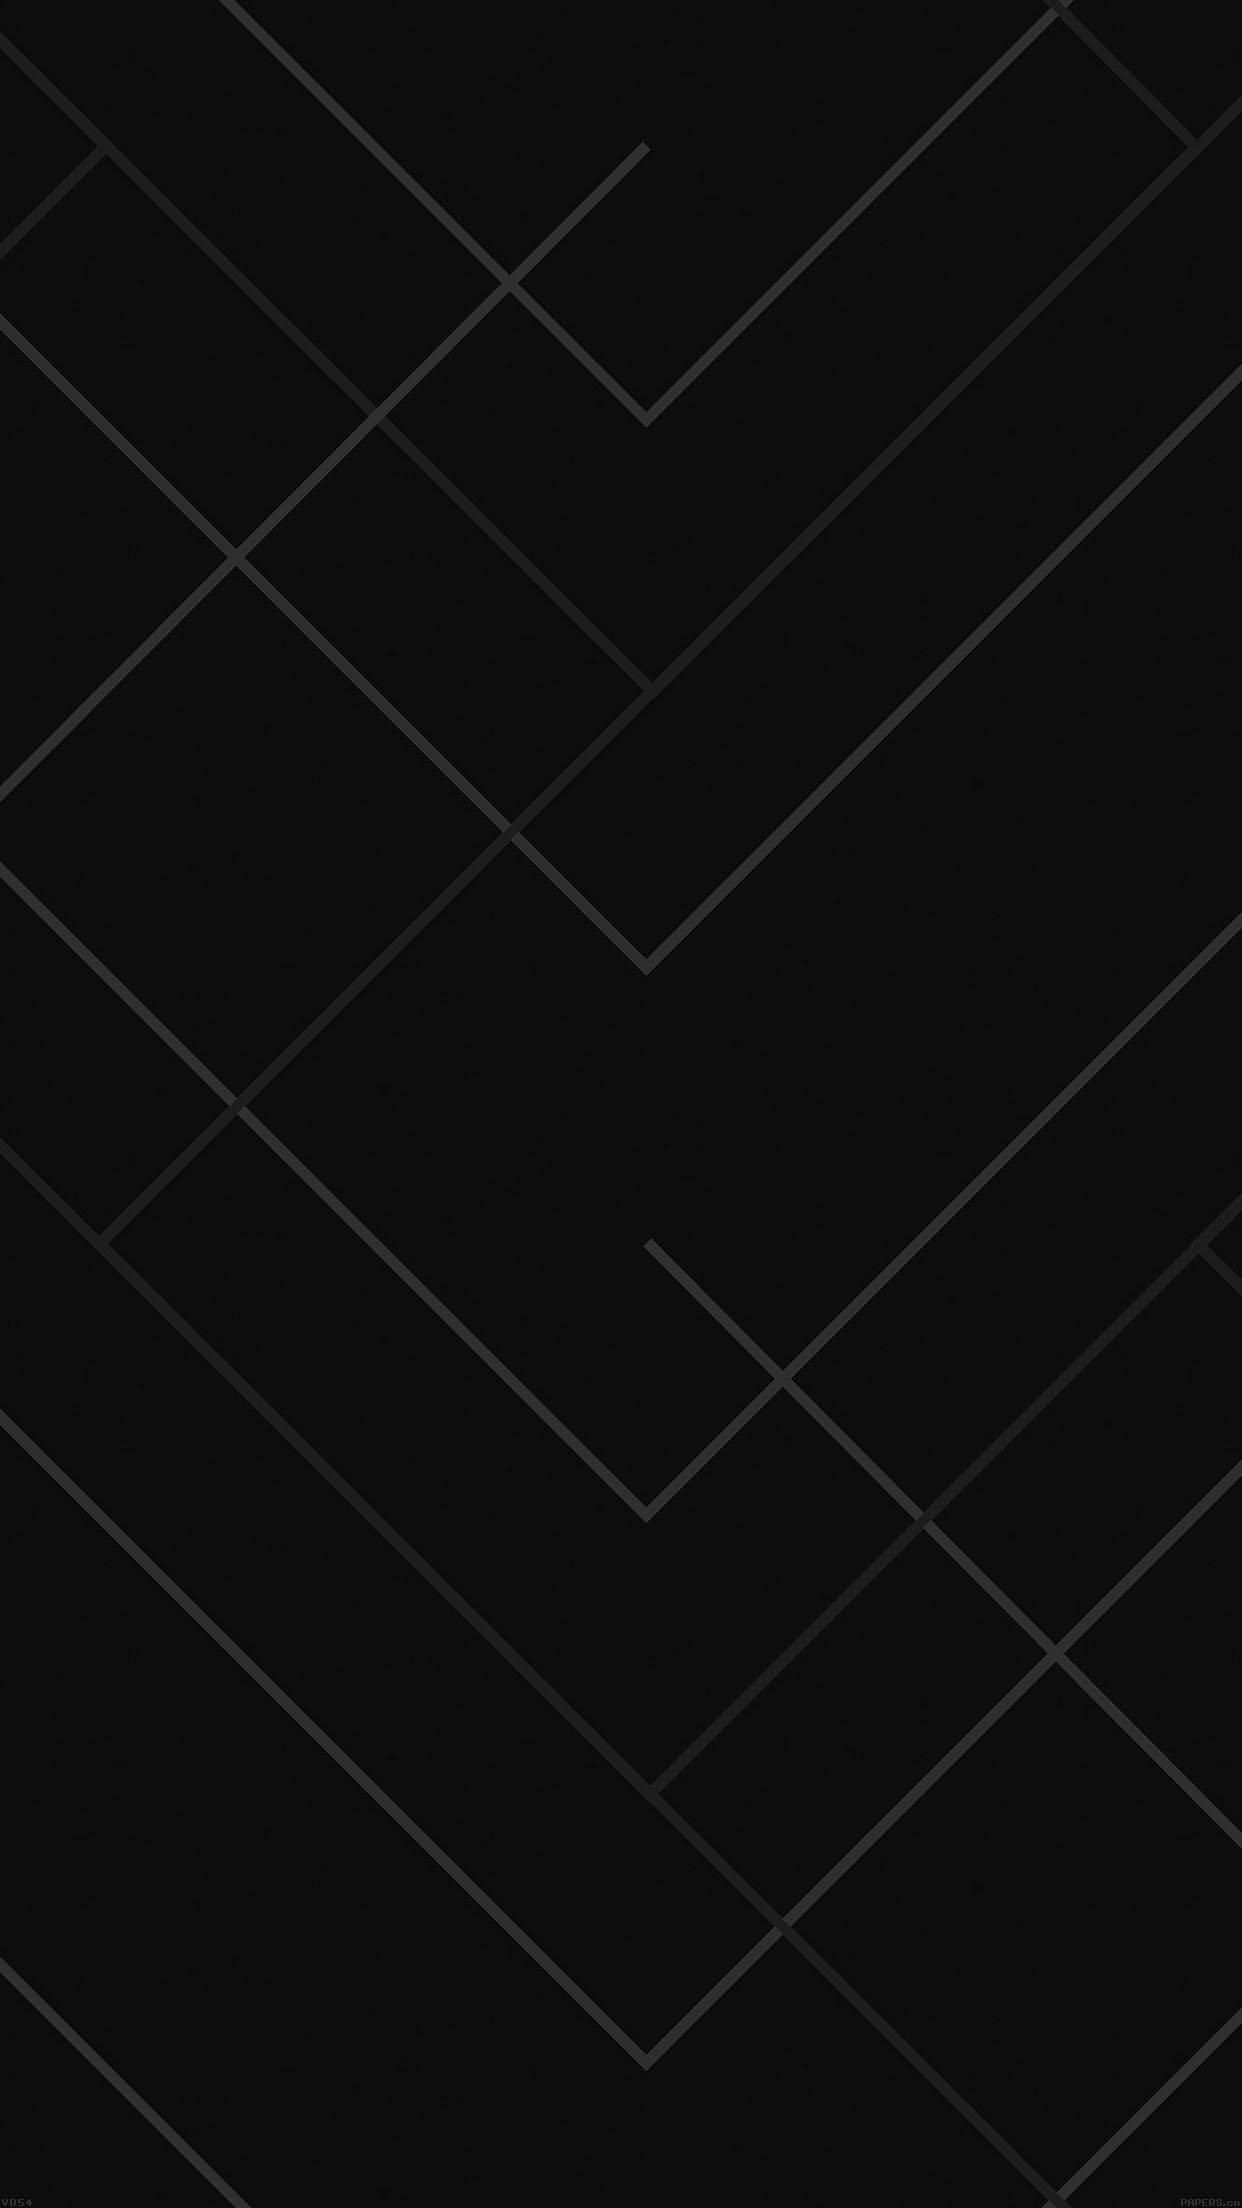 Abstract Black Geometric Line Pattern - iPhone 6s Plus Wallpaper